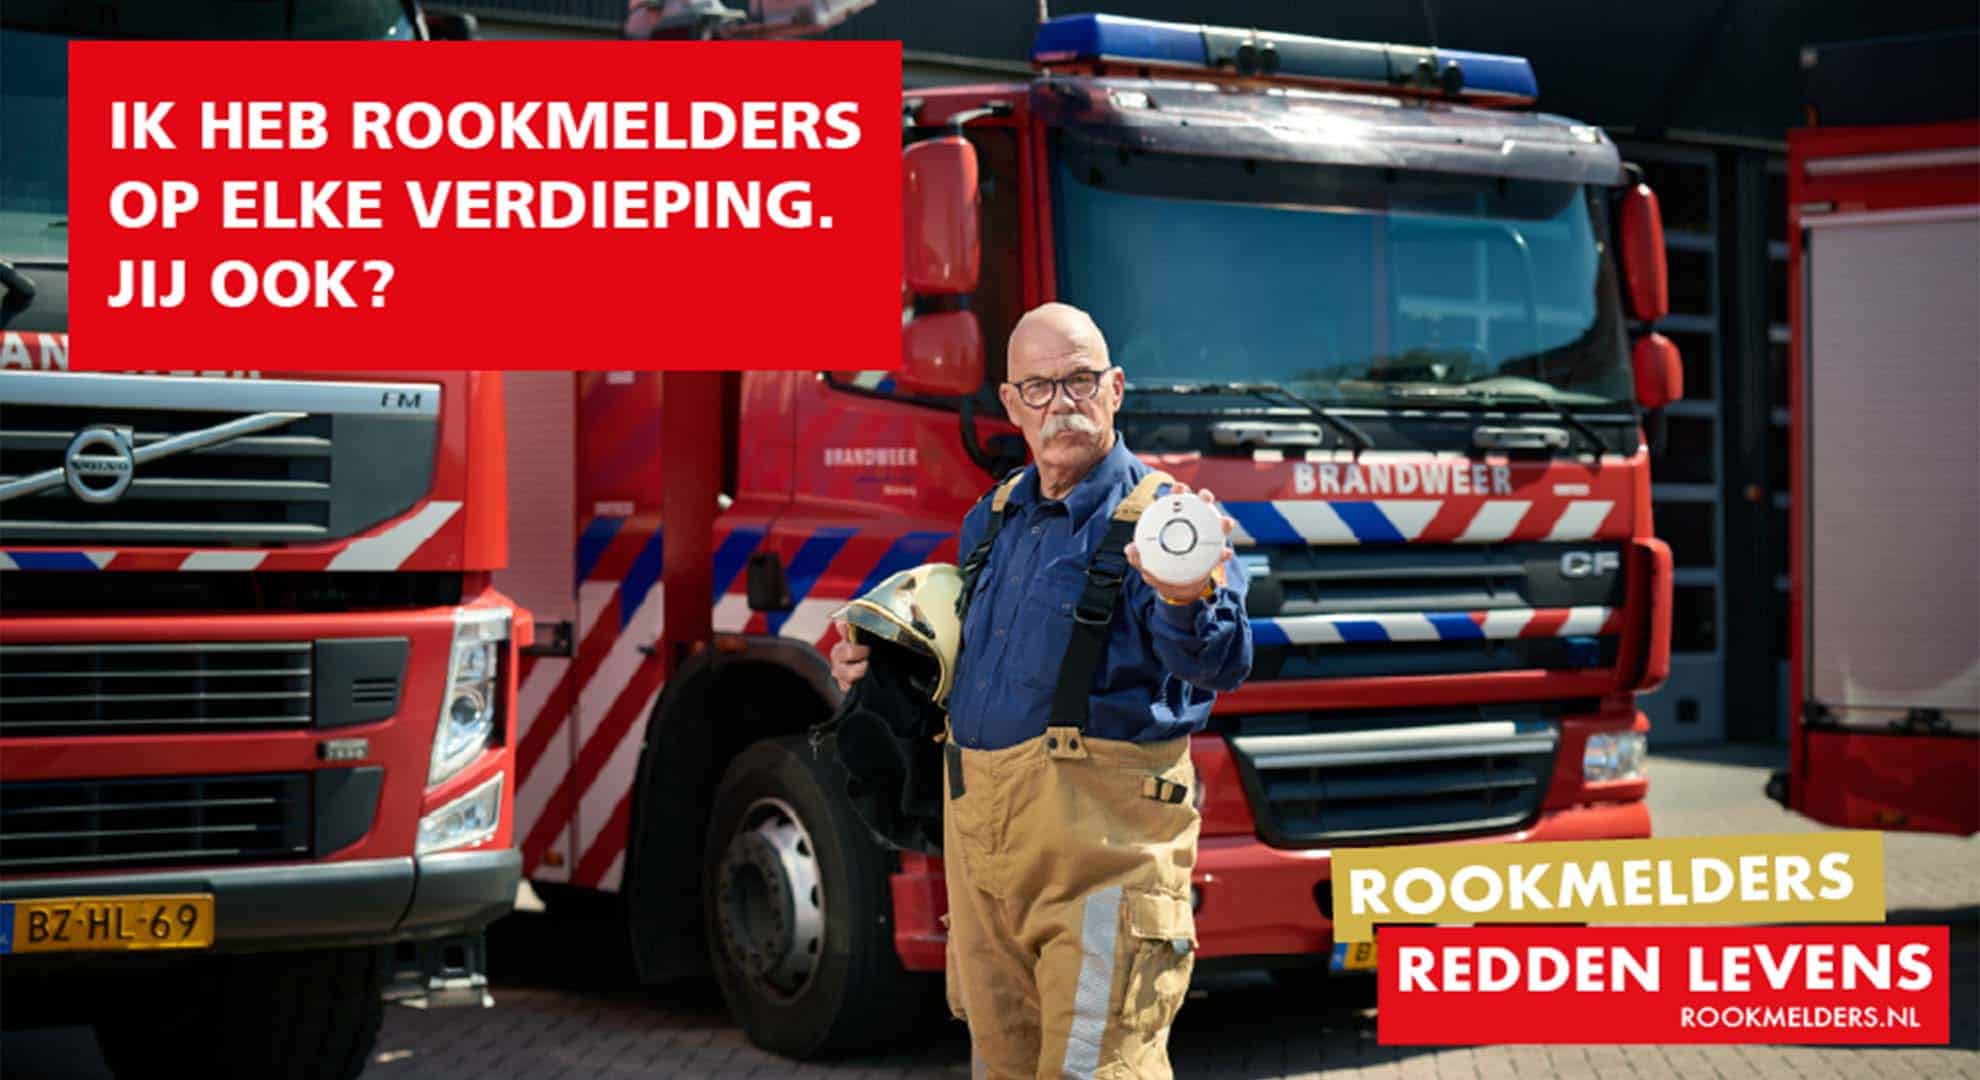 Afbeelding vrijsselland.nl startbericht